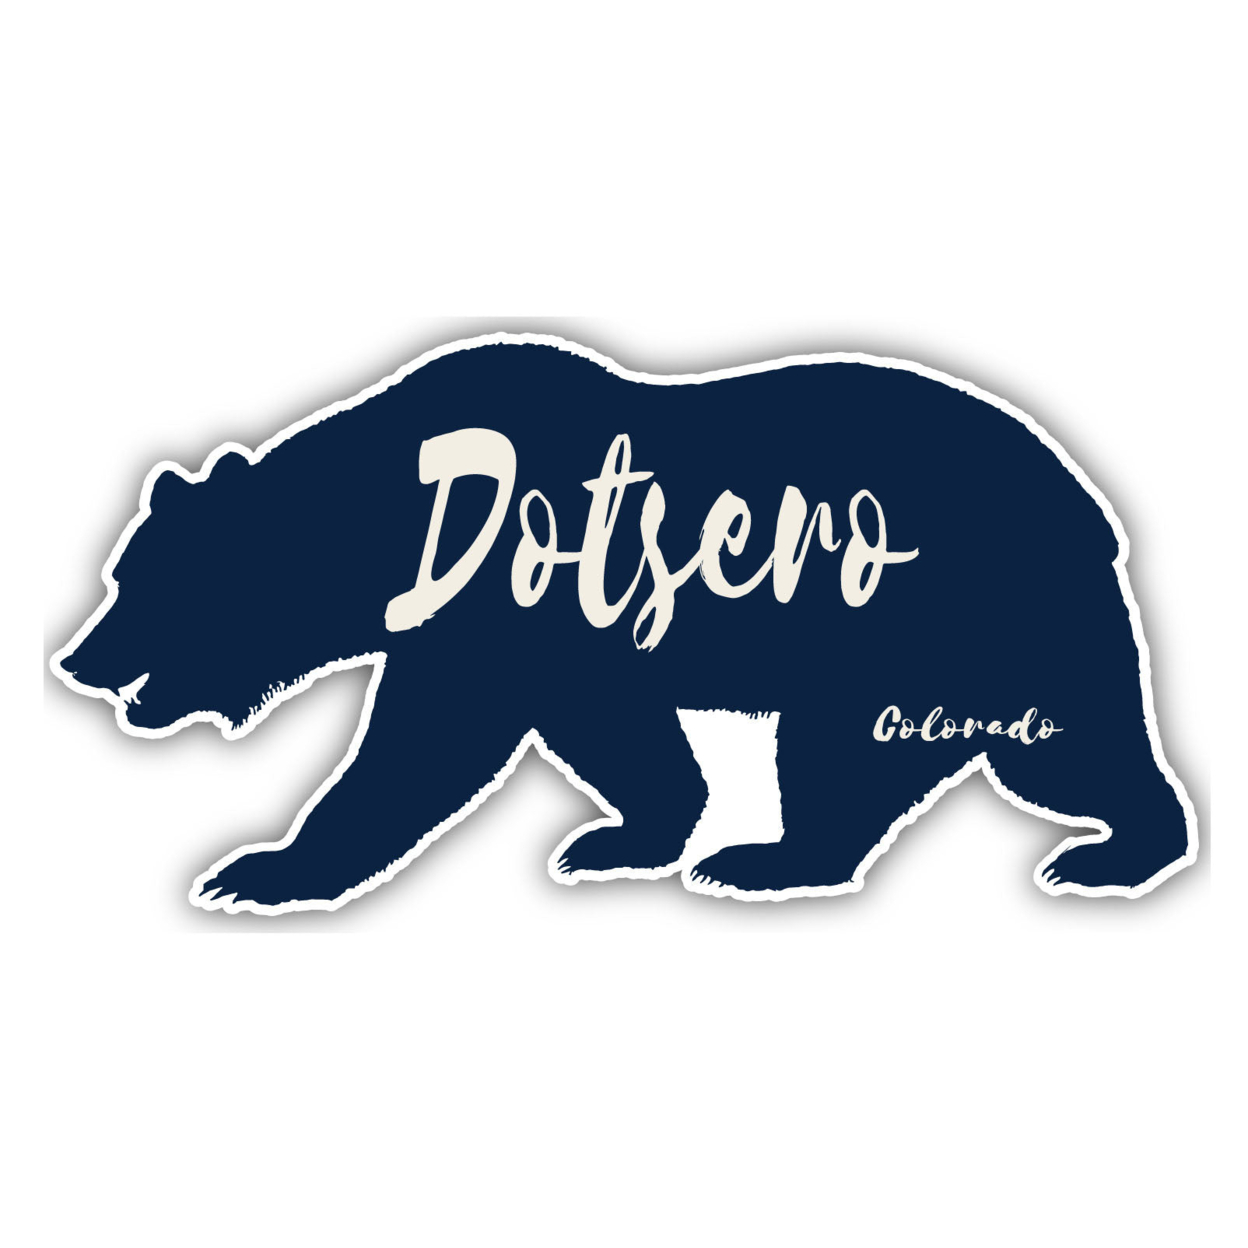 Dotsero Colorado Souvenir Decorative Stickers (Choose Theme And Size) - 4-Pack, 12-Inch, Bear